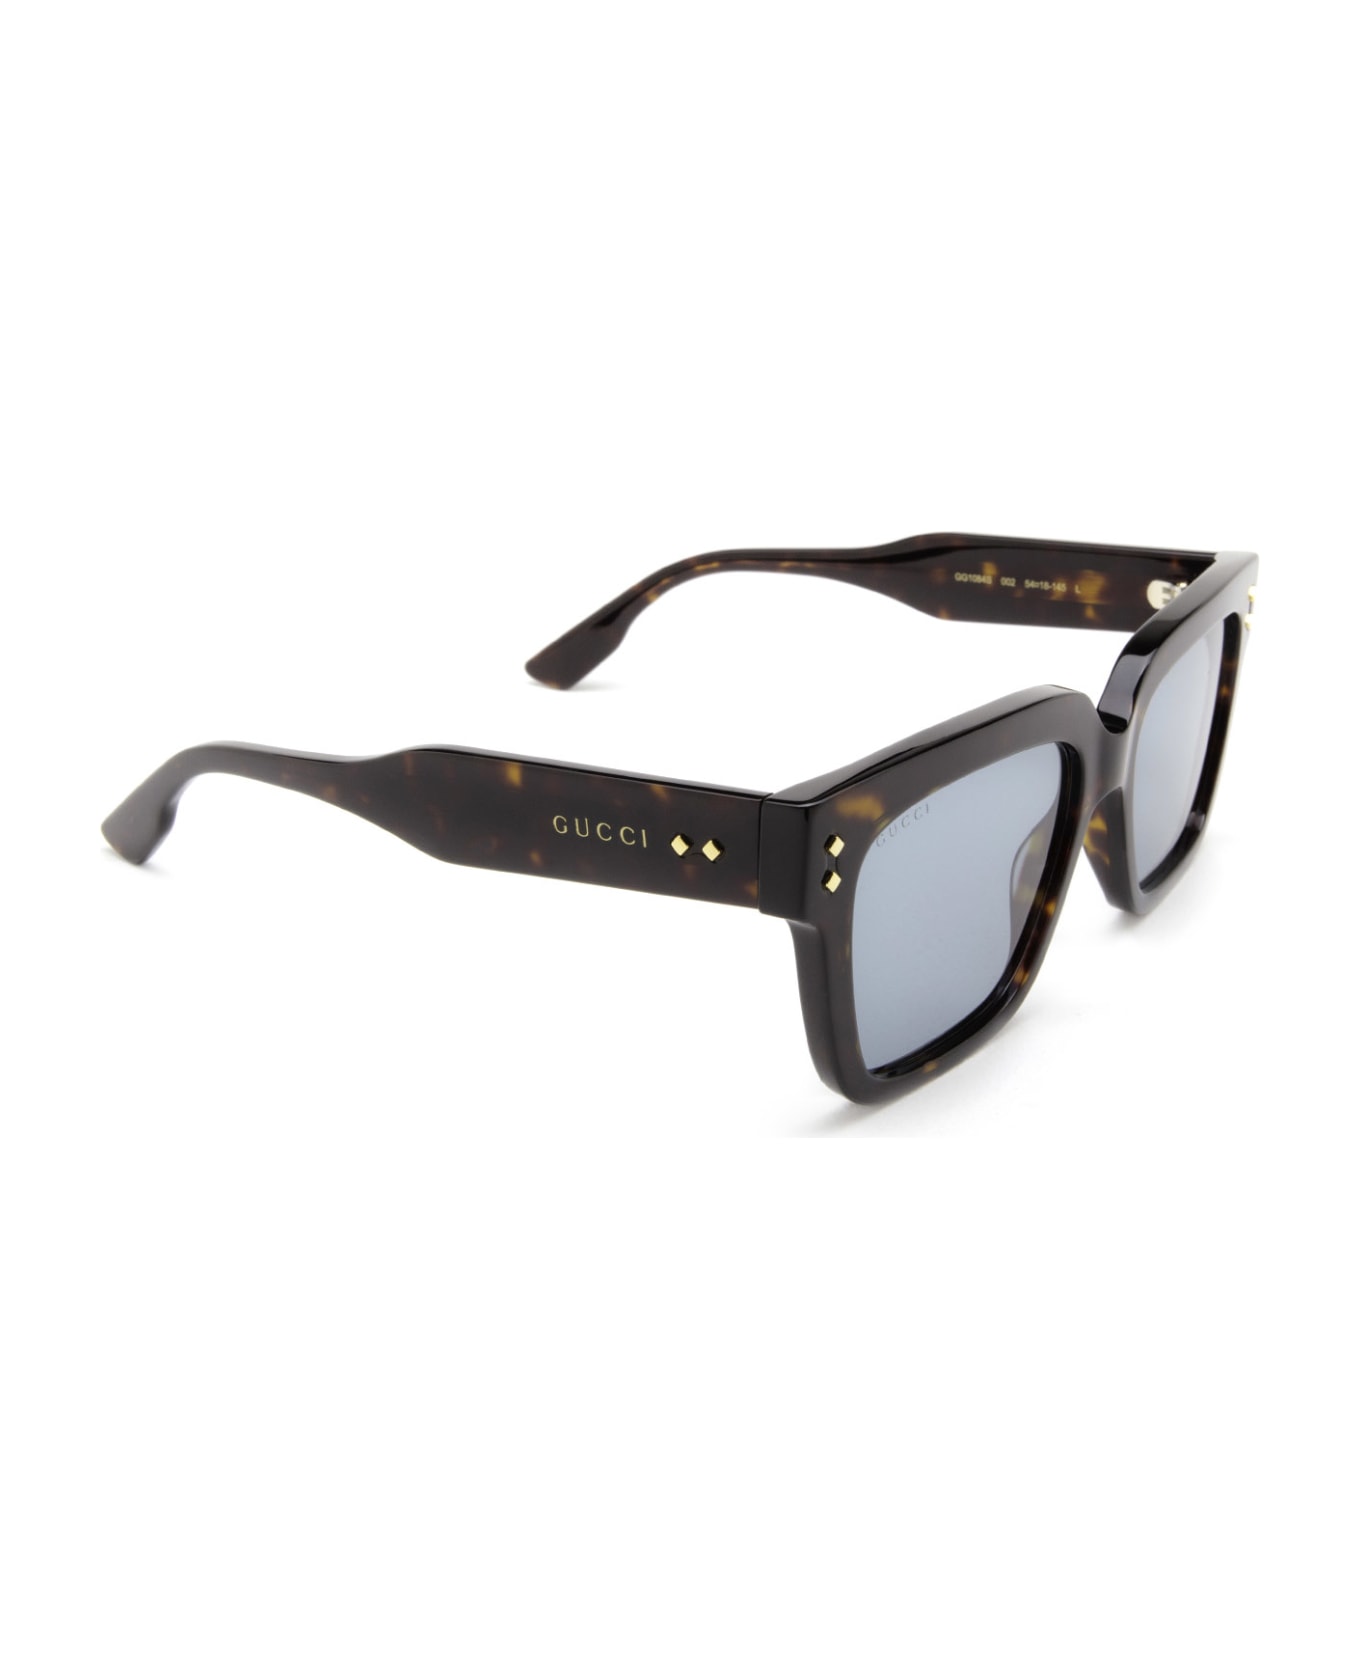 Gucci Eyewear Gg1084s Havana Sunglasses - Havana